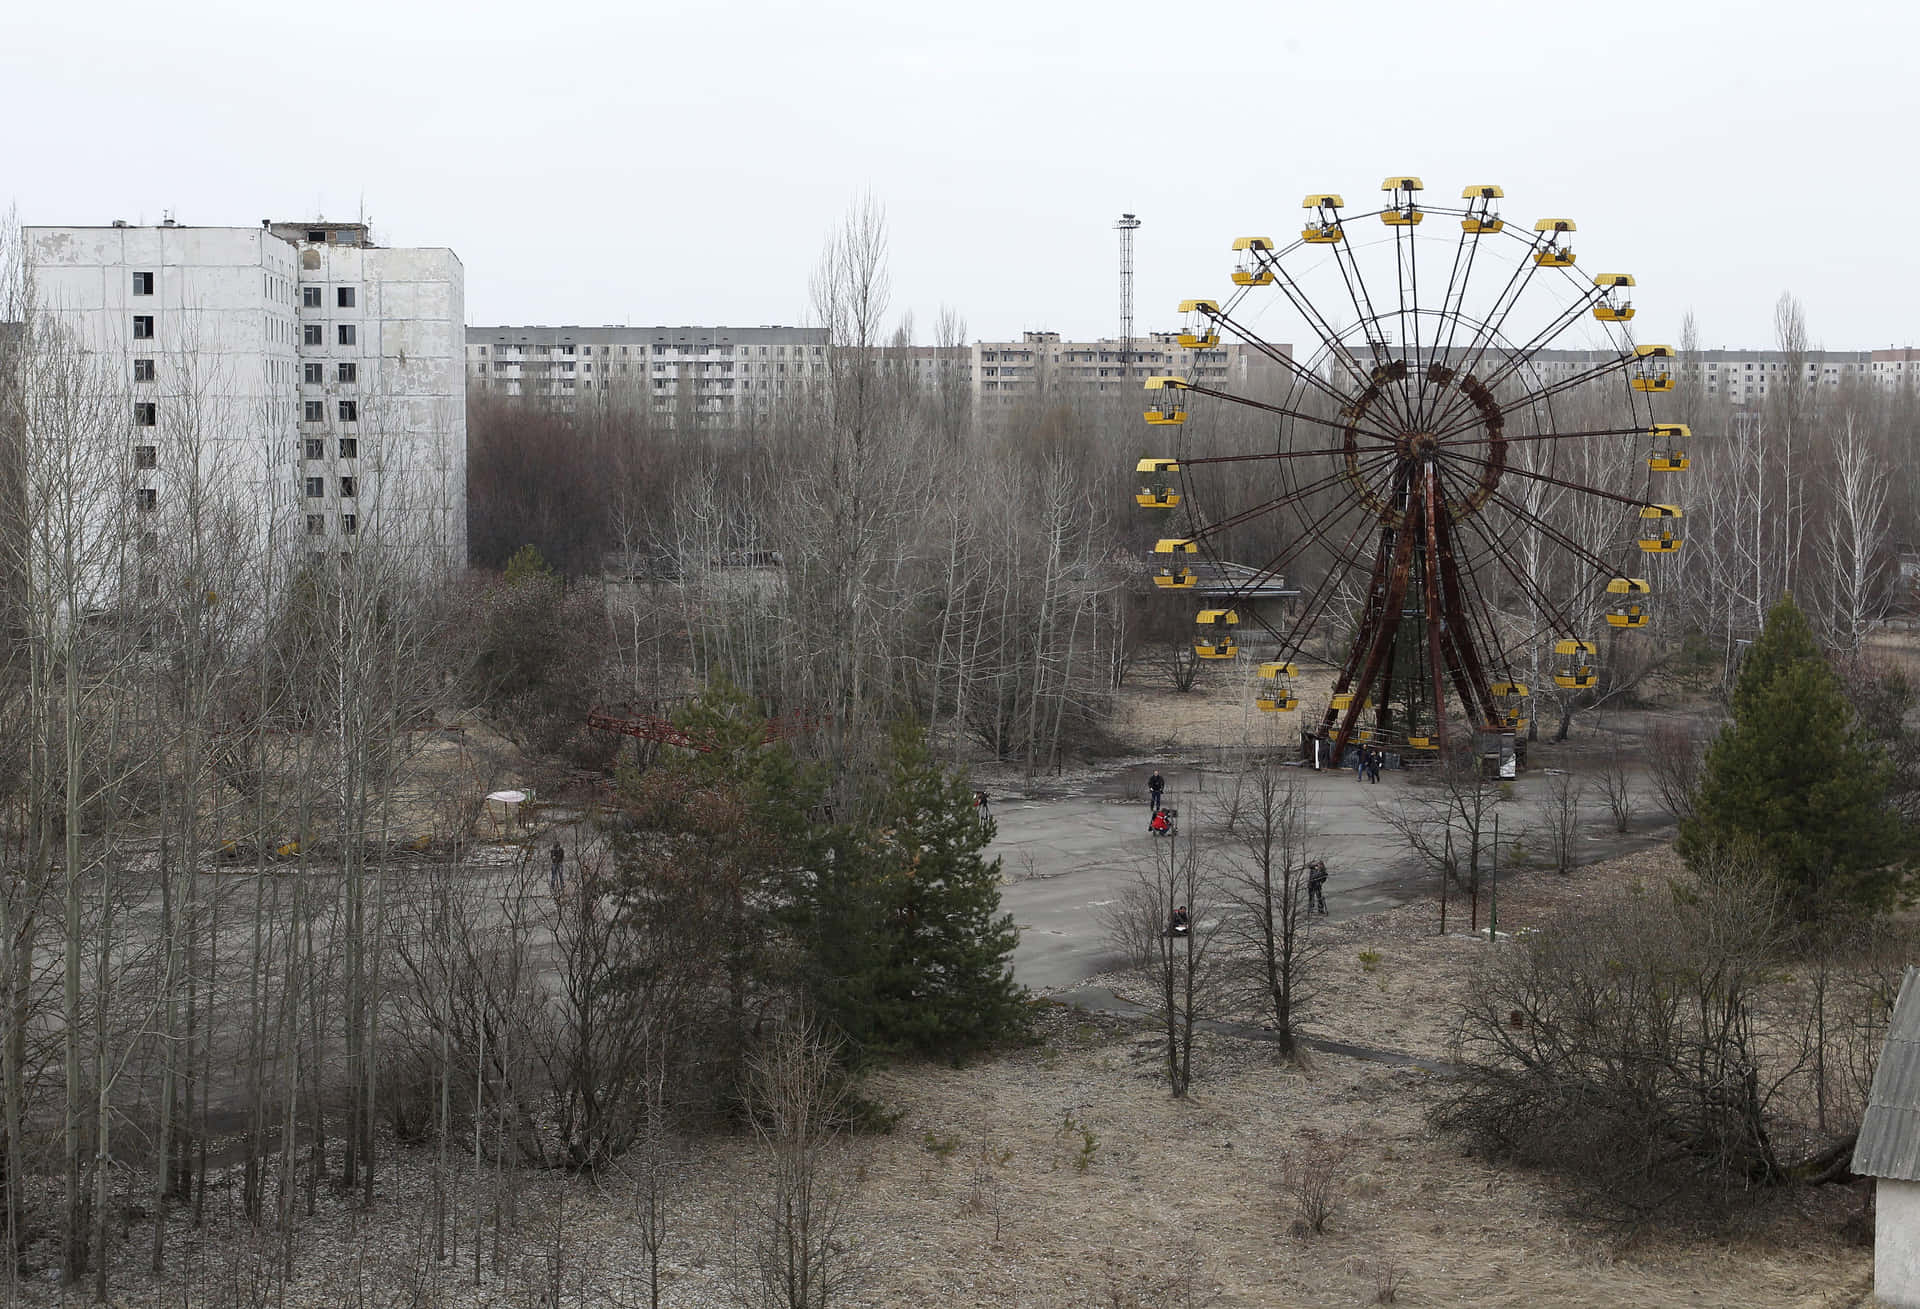 A Ferris Wheel In A Deserted Area